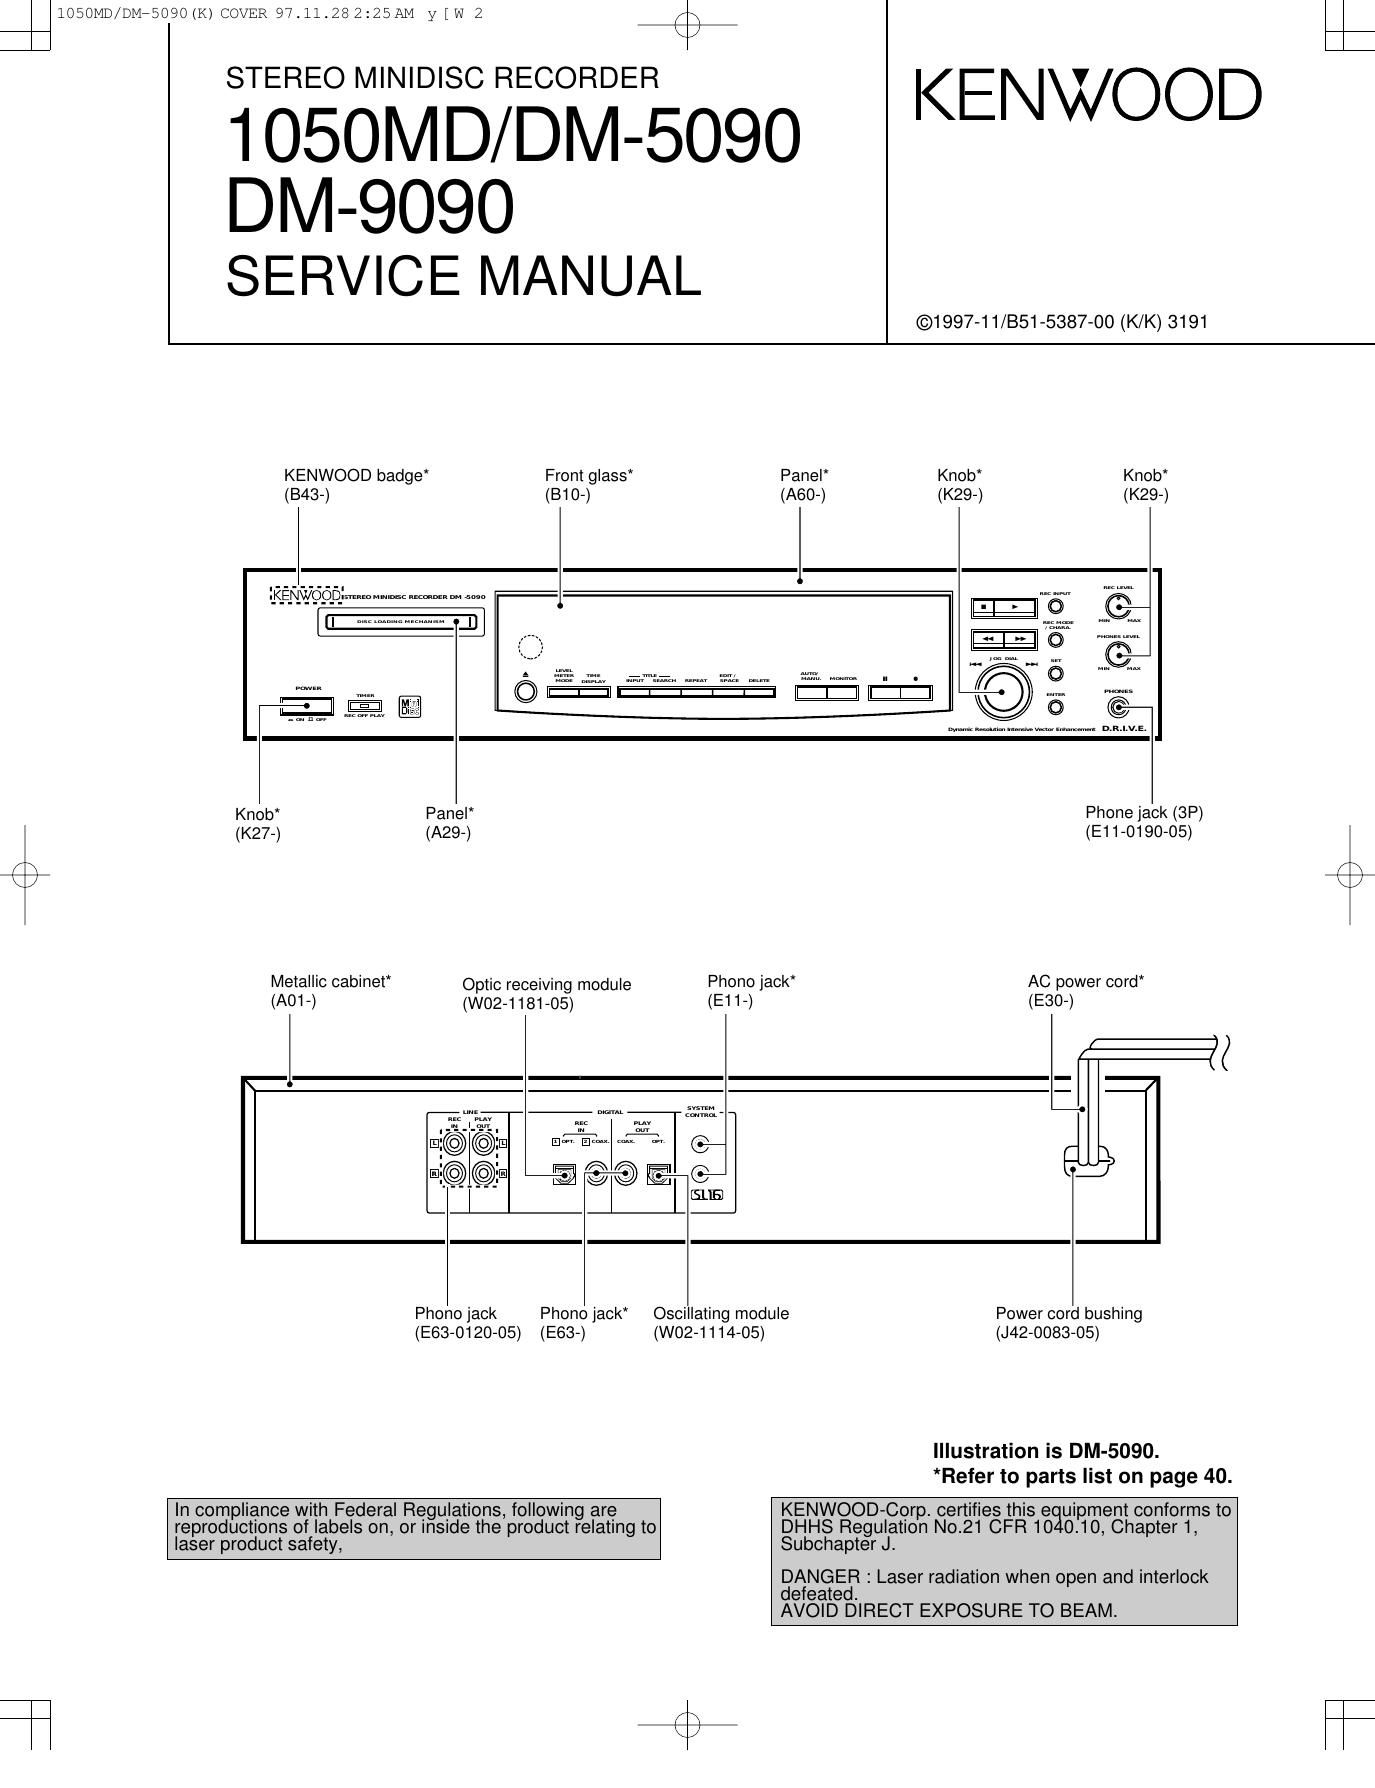 Kenwood 1050 MD Service Manual